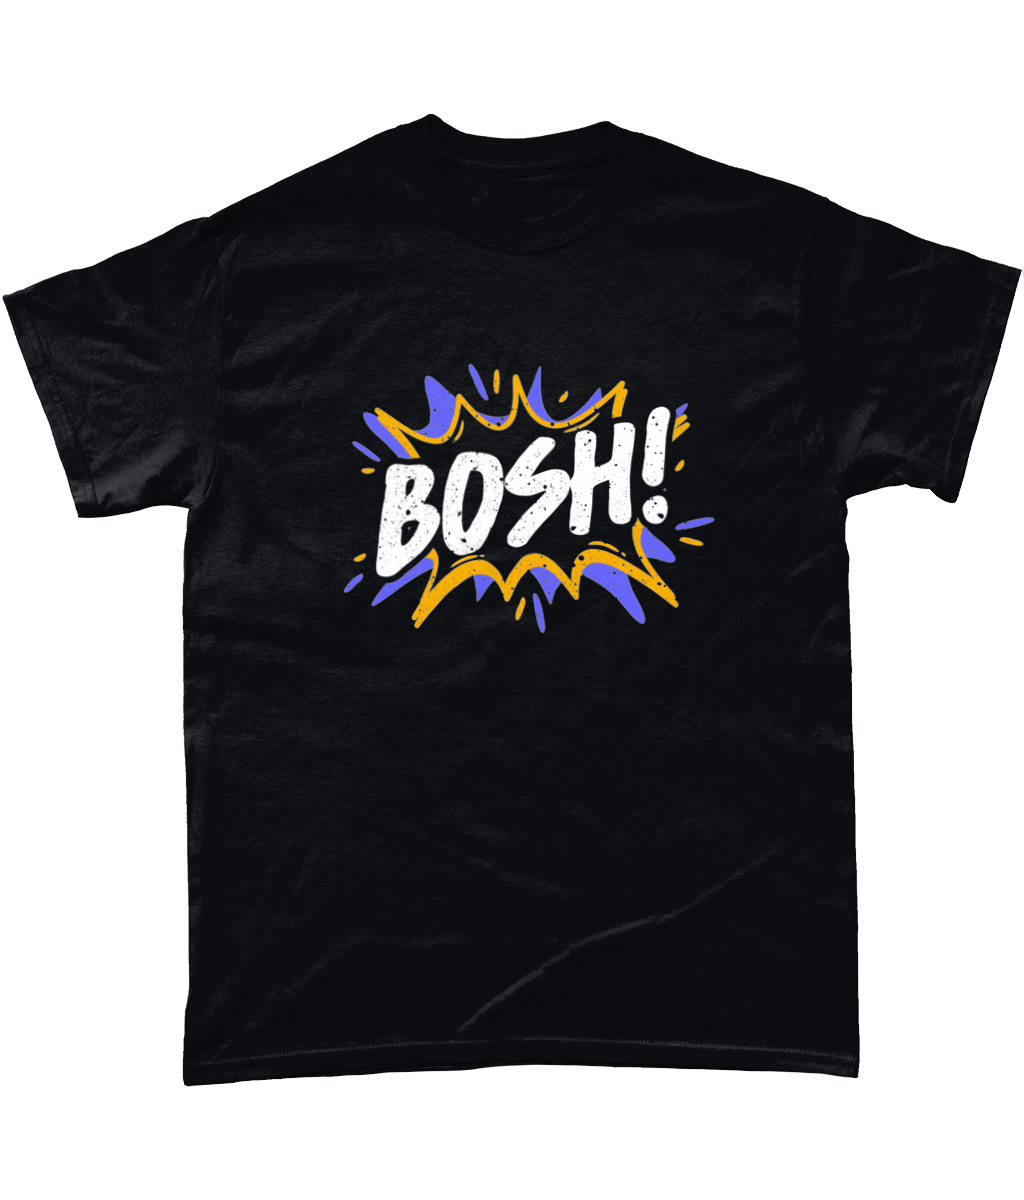 BOSH! T-Shirt